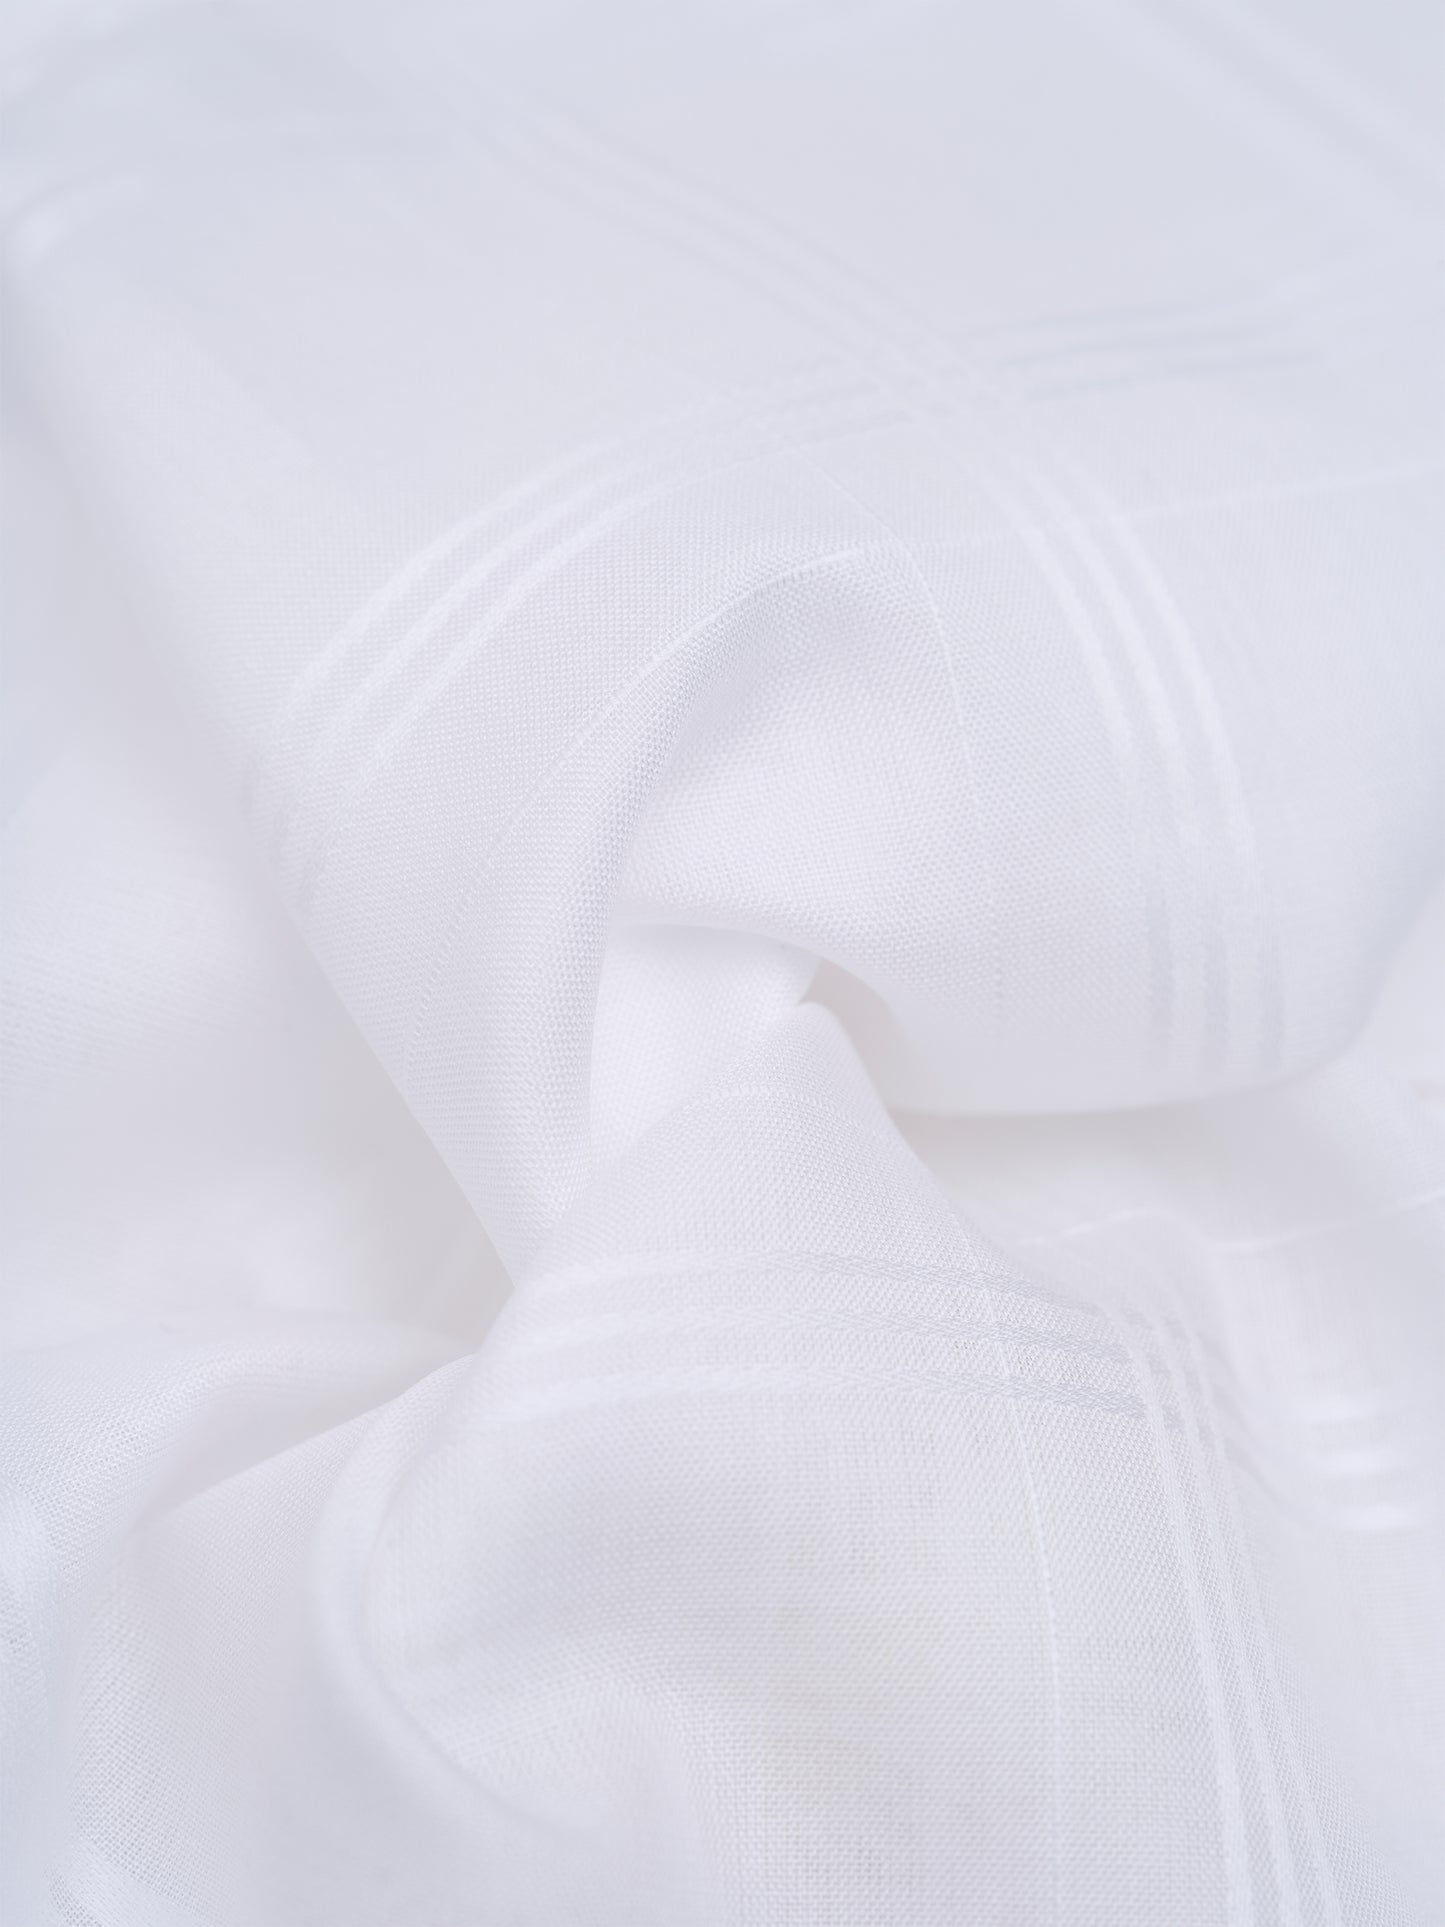 Sarabande Blanc Handkerchief - Oscar Hunt